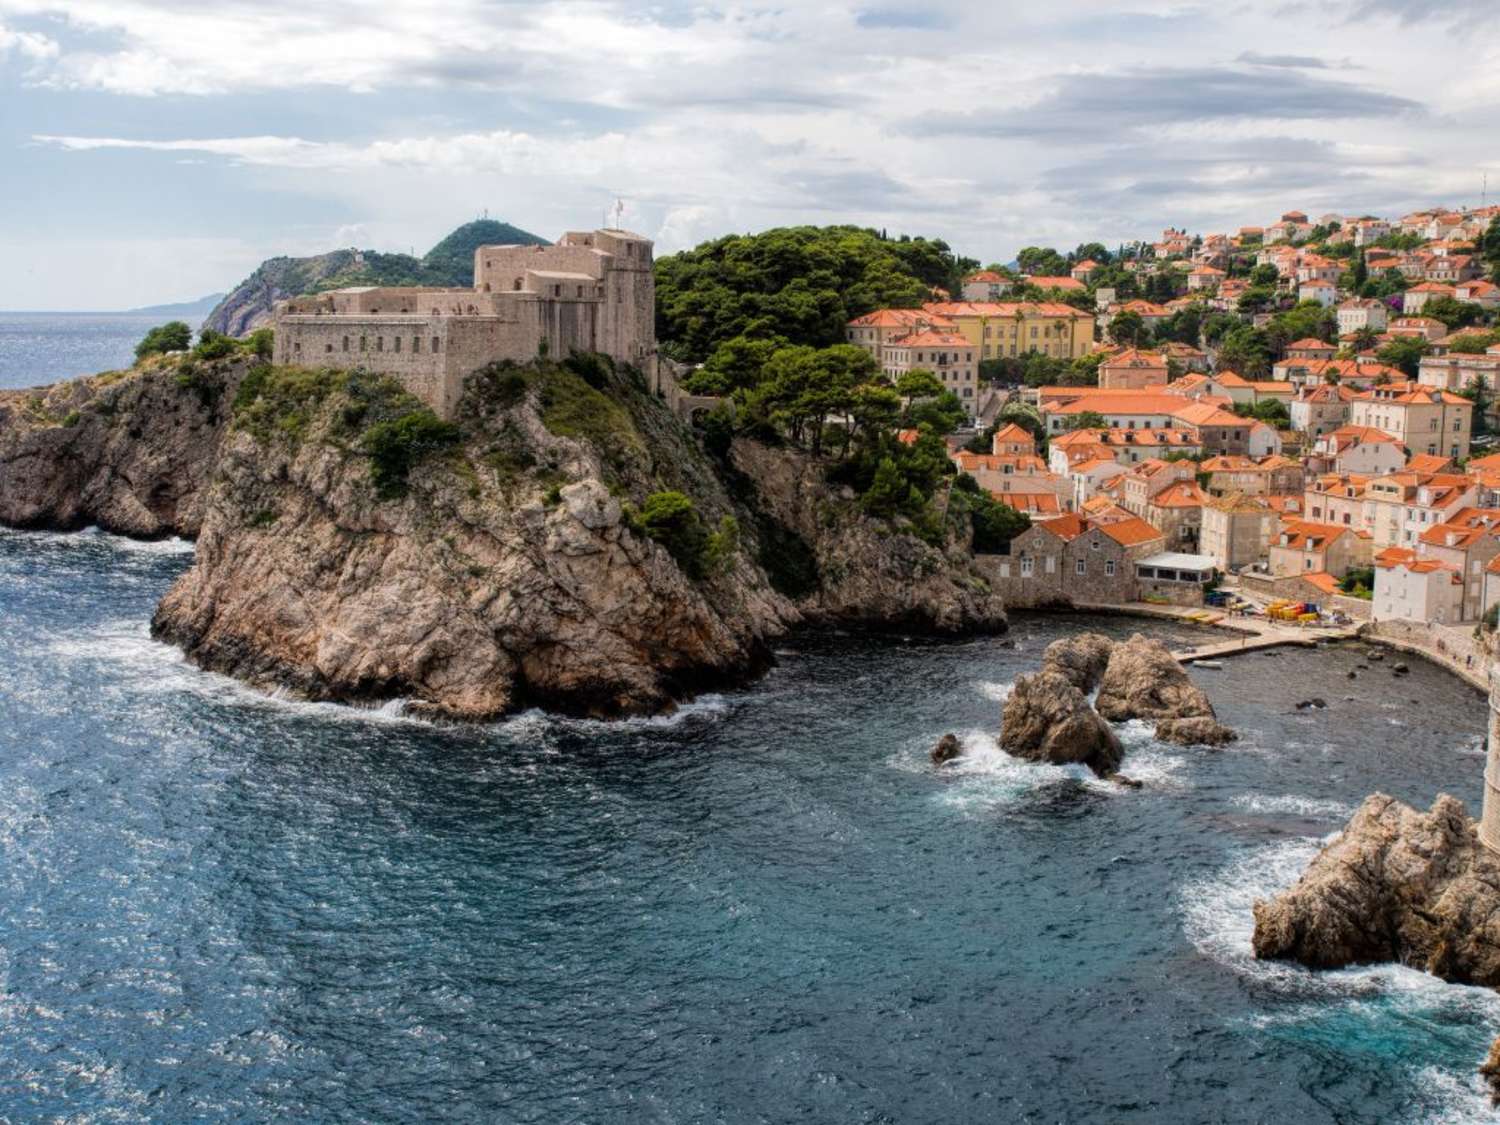 Game of Thrones Filming Locations in Croatia